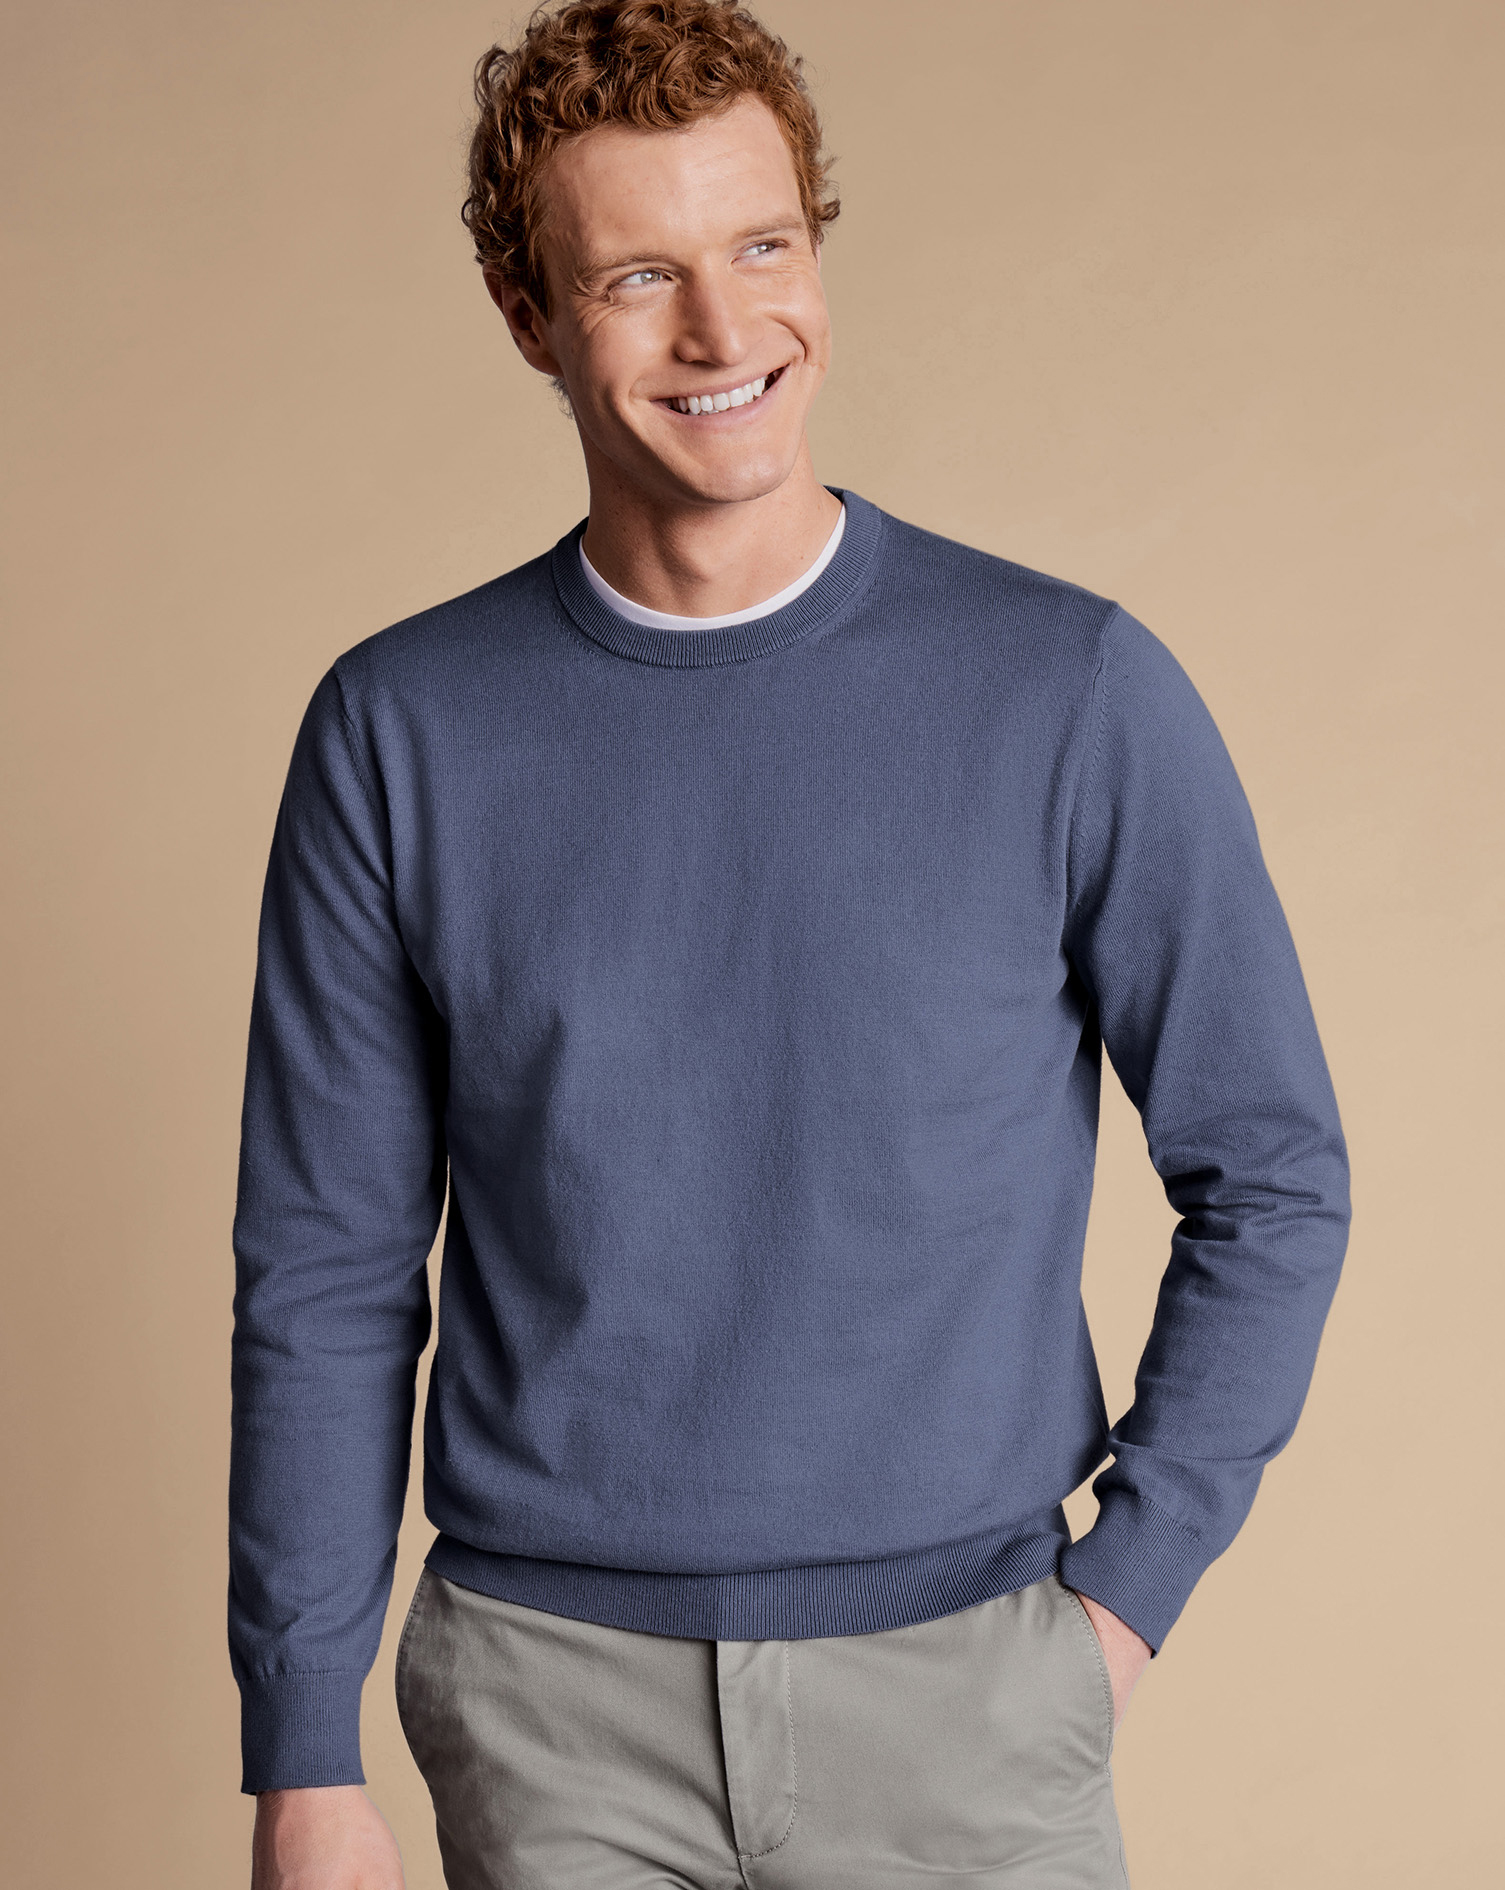 Men's Charles Tyrwhitt Combed Crew Neck Sweater - Heather Blue Size Medium Cotton
